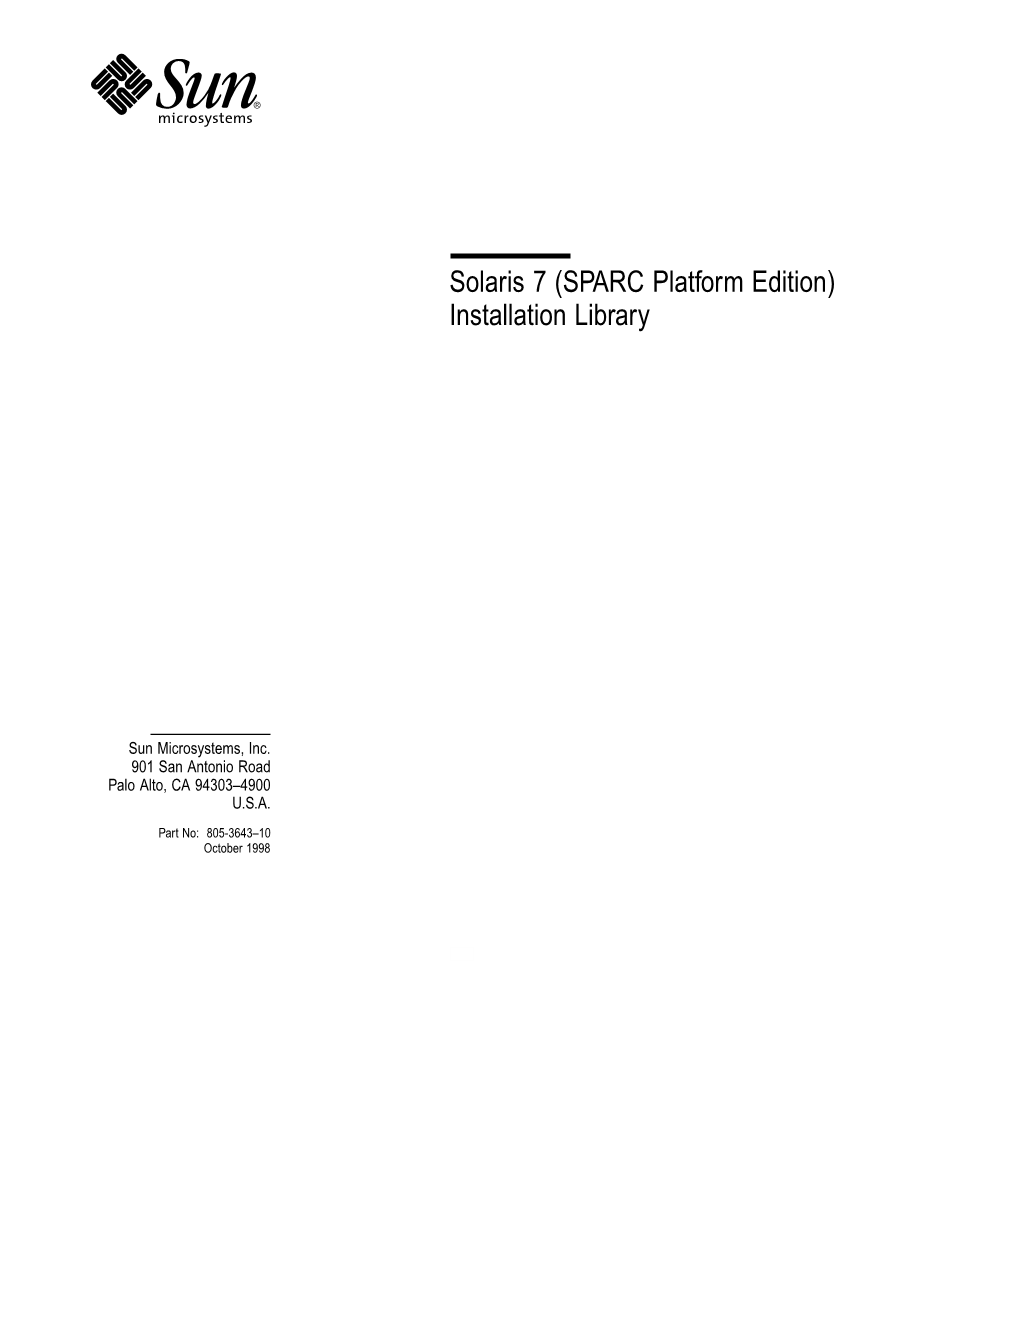 Solaris 7 (SPARC Platform Edition) Installation Library